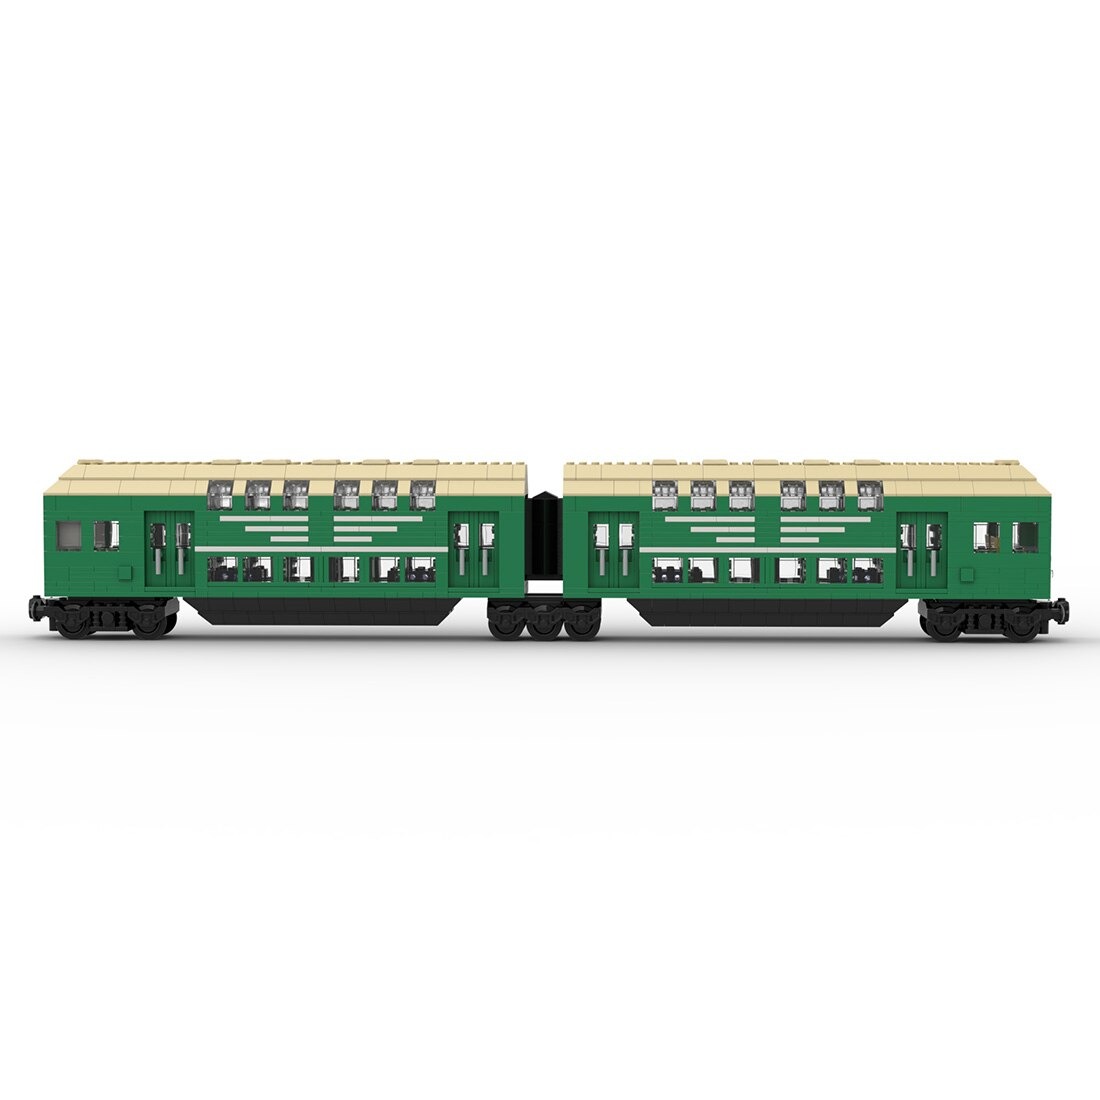 authorized moc 109281 7 axle train carri main 1 1 - KAZI Block